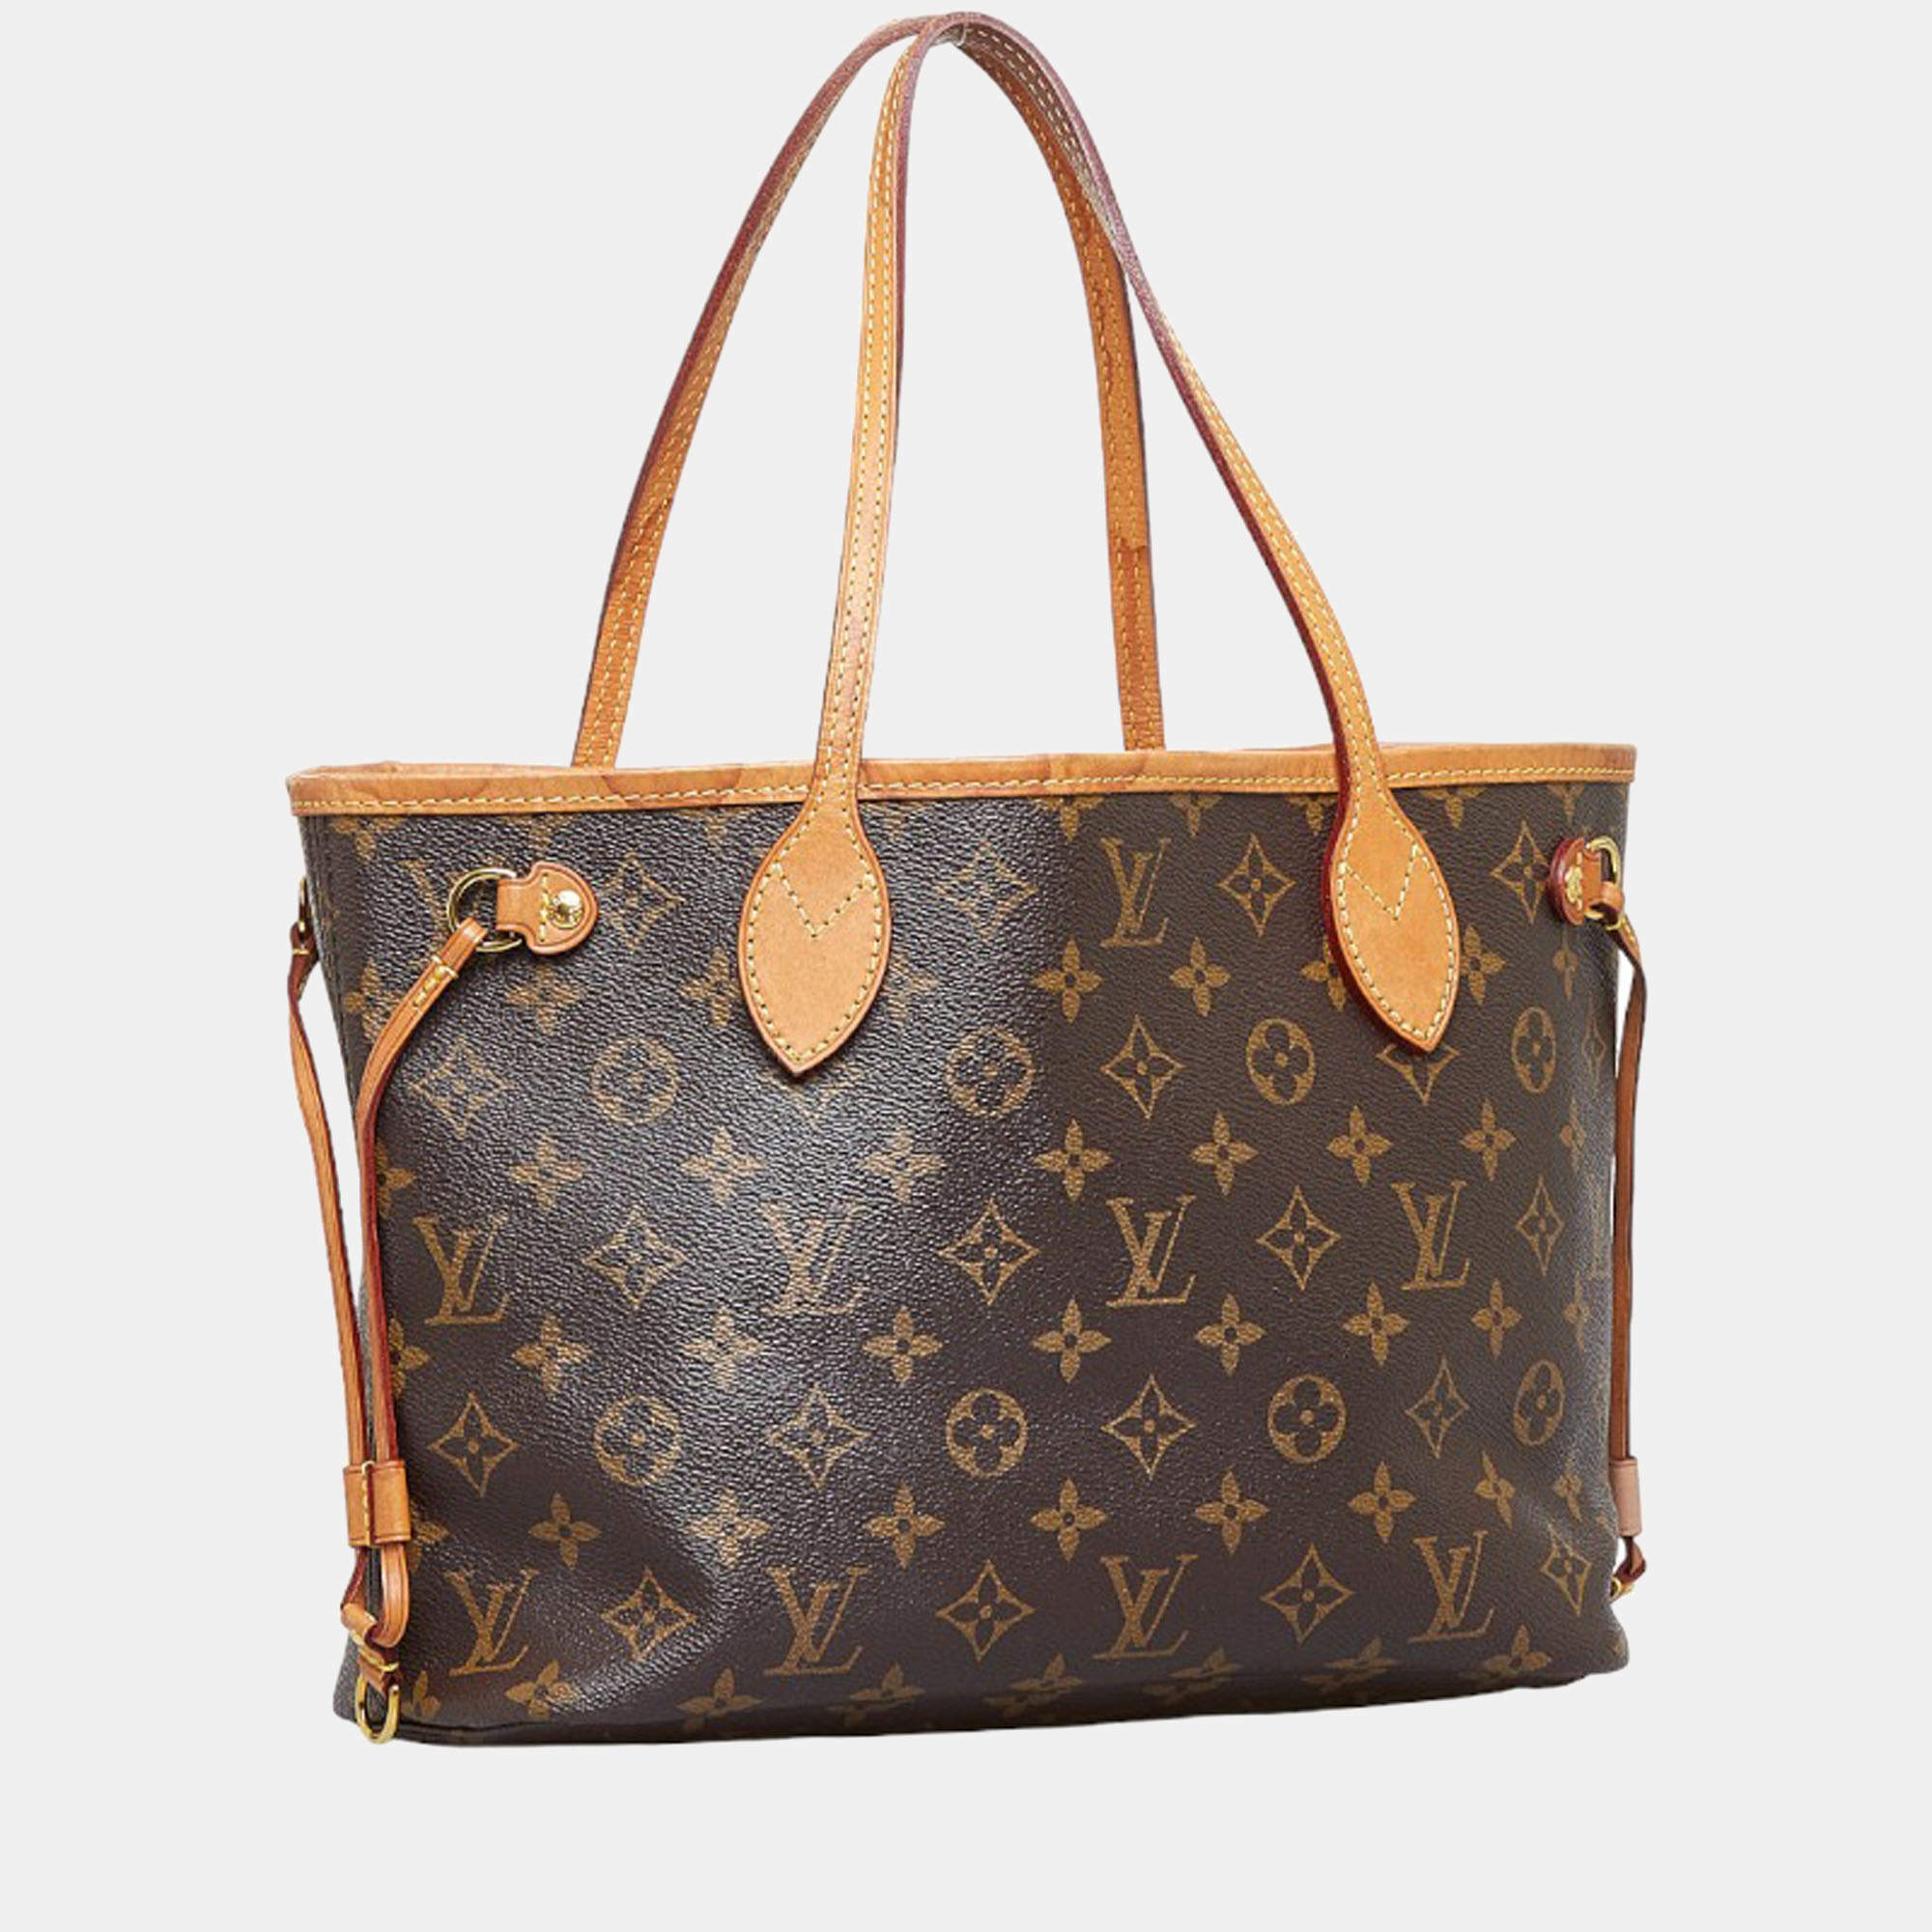 Handbags Louis Vuitton Louis Vuitton Handbag Neverfull PM Monogram with initials